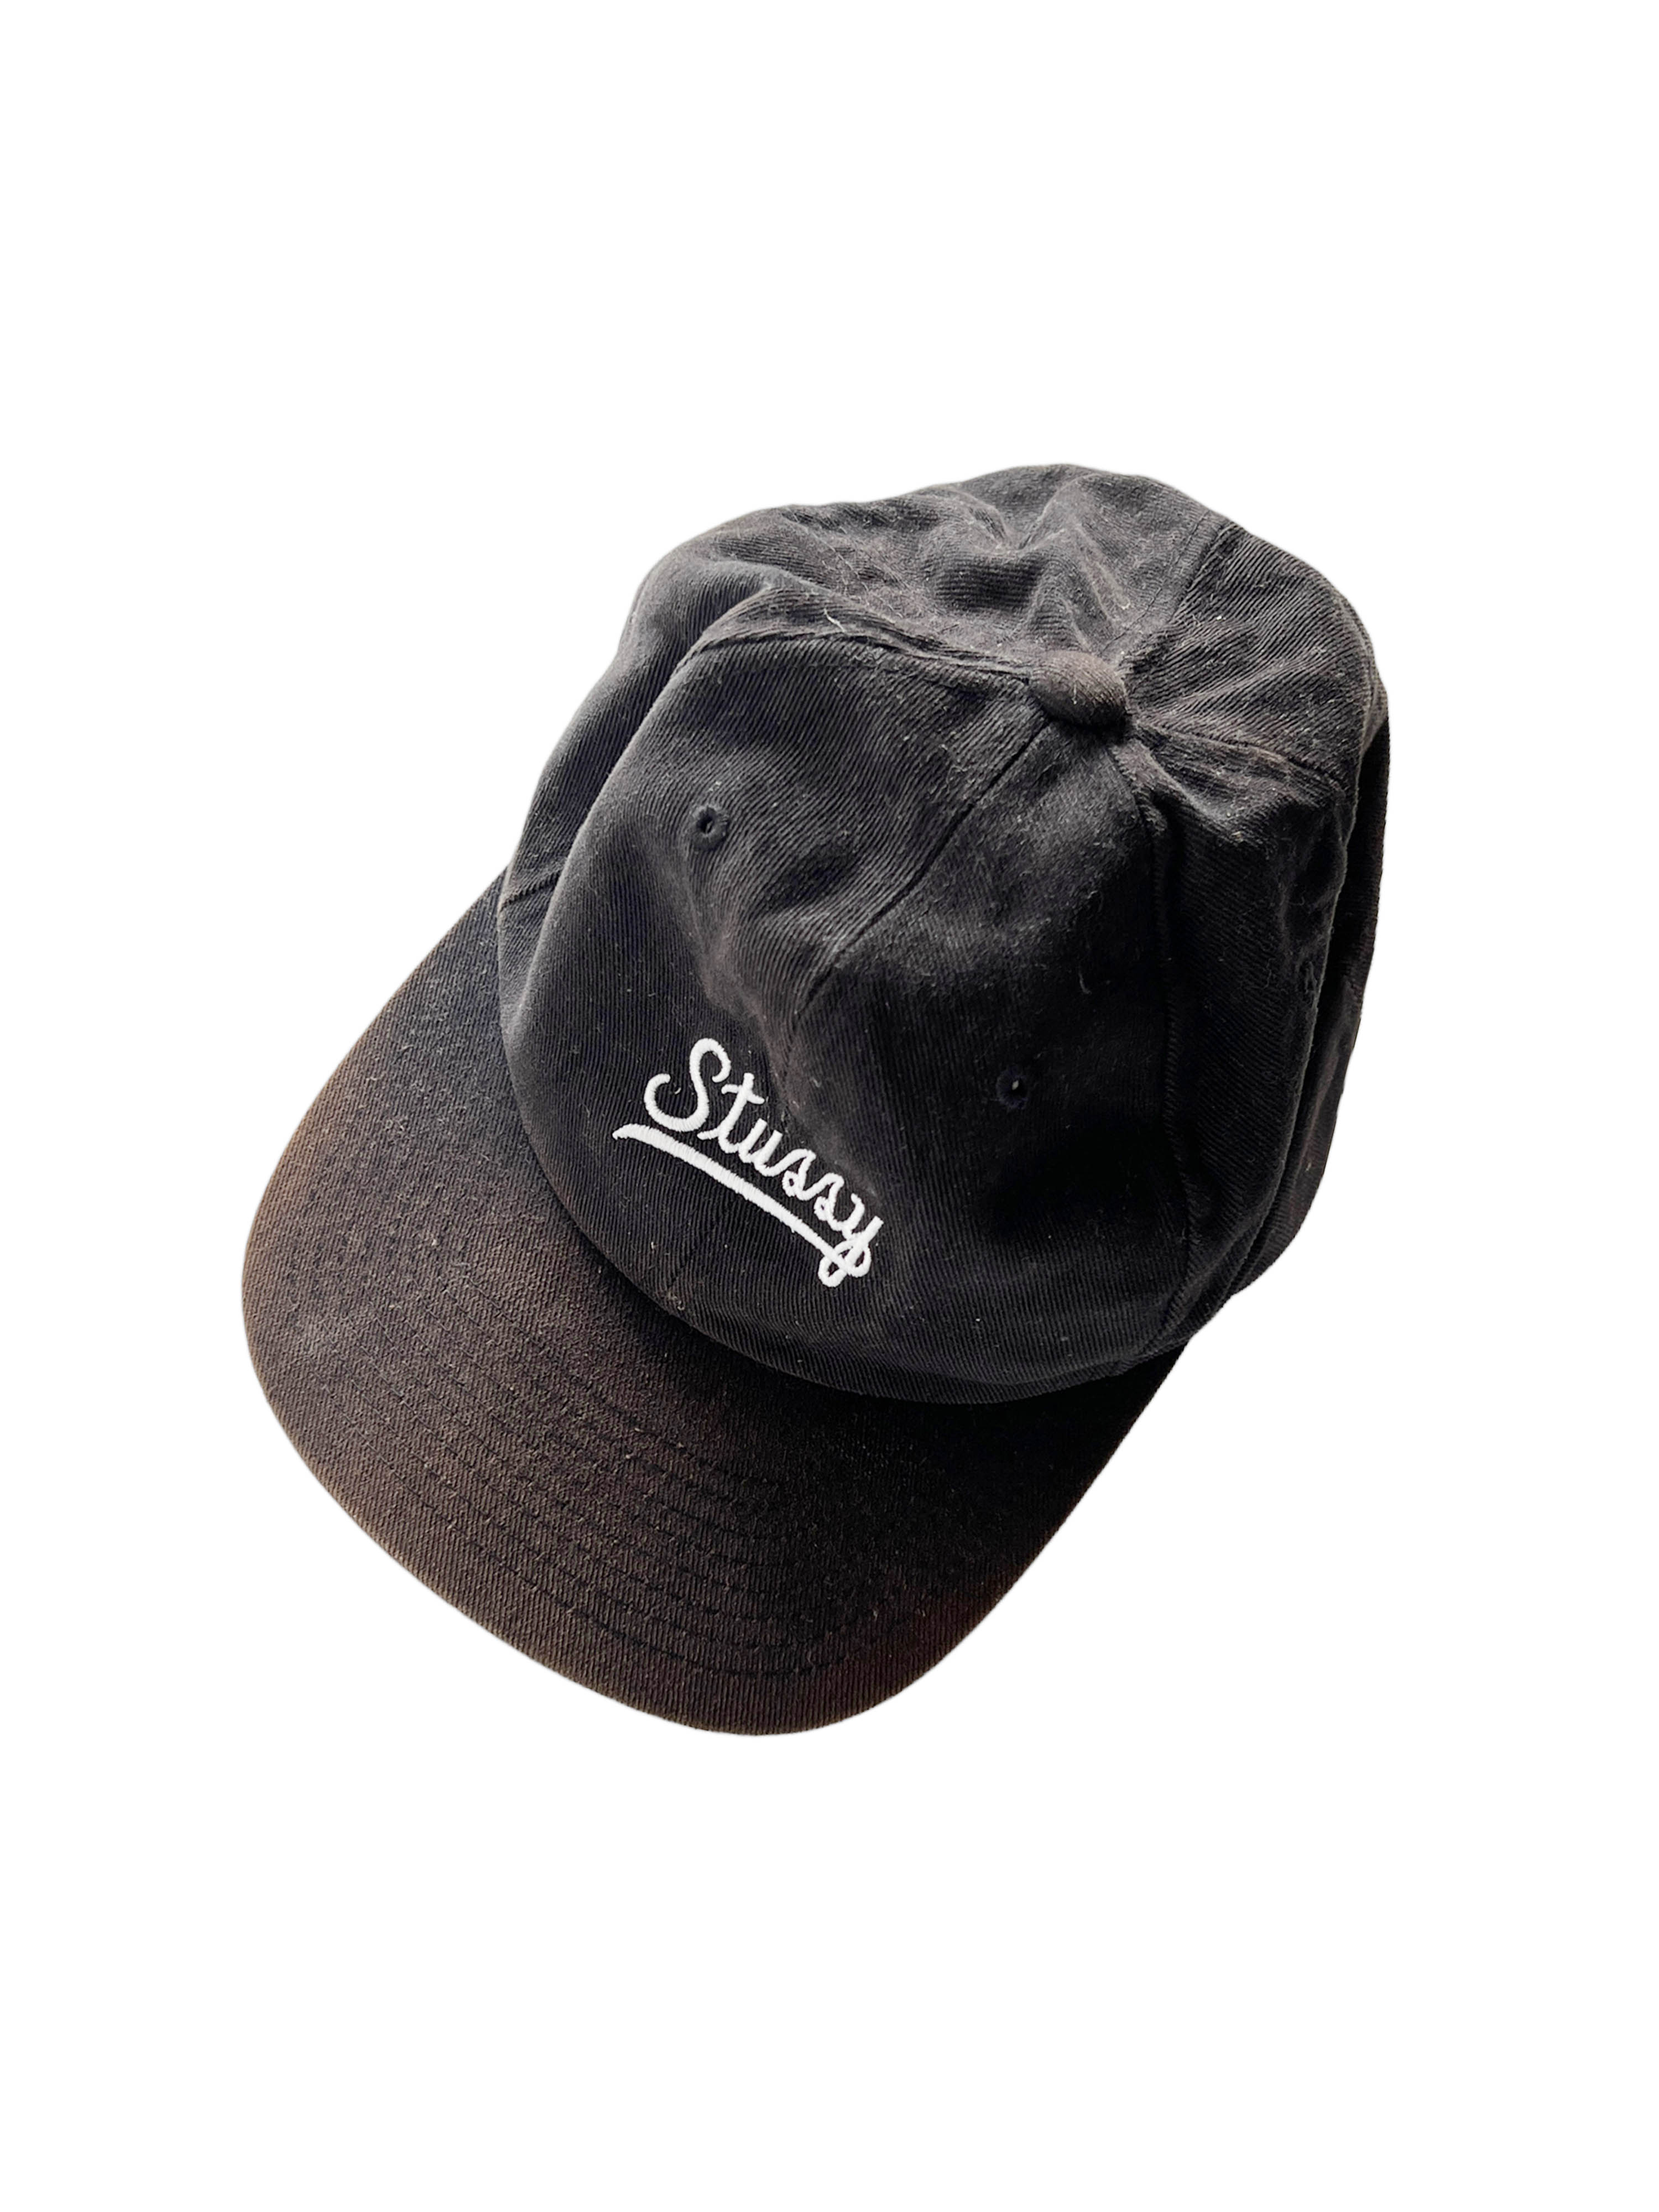 STUSSY logo cap